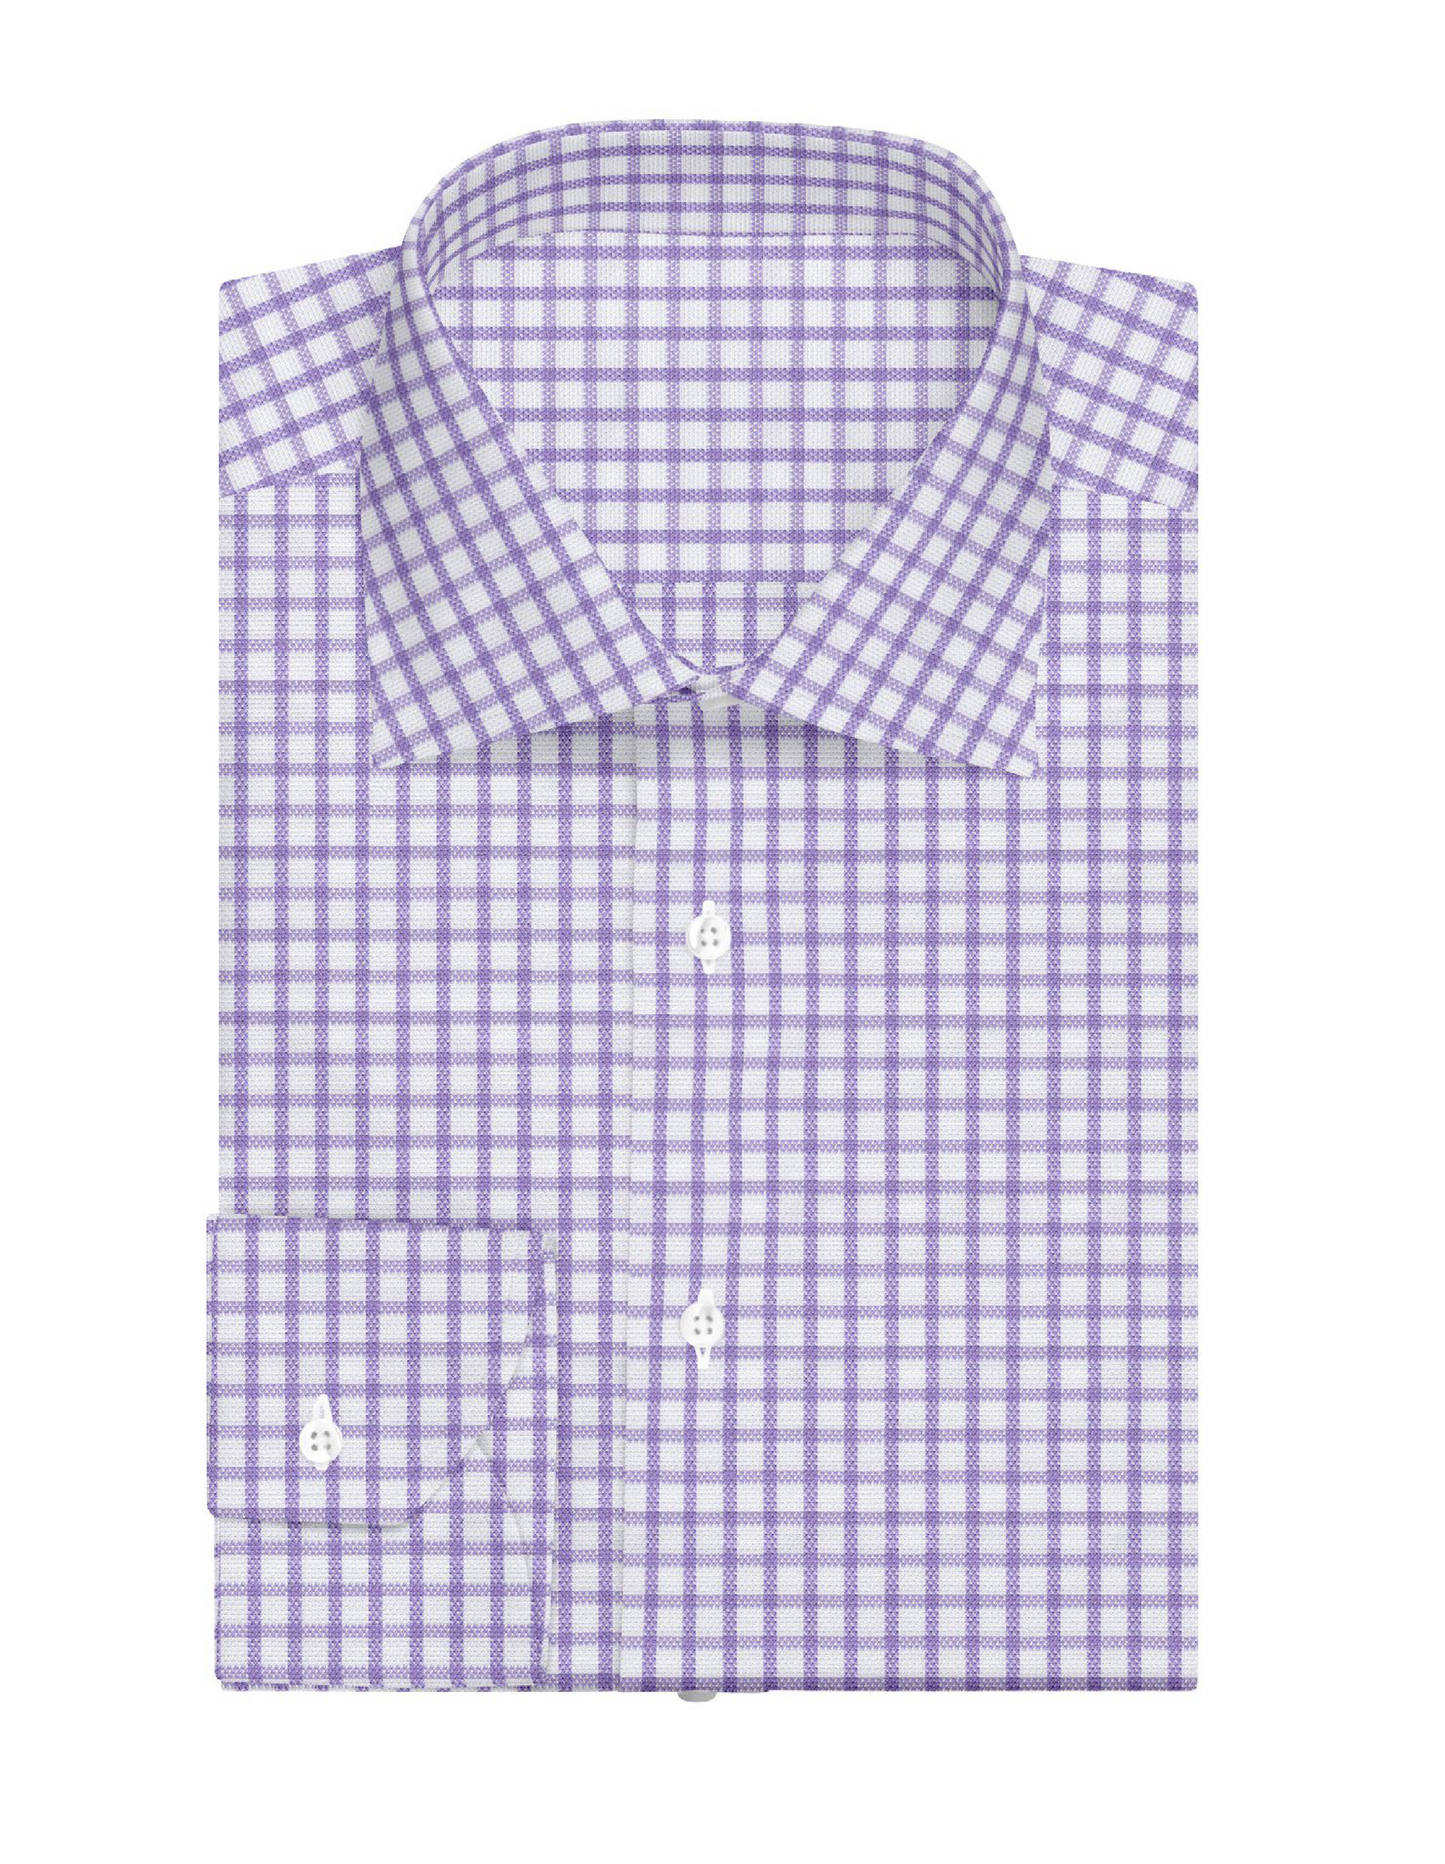 Dress Shirt Thin Purple Plaid 6426